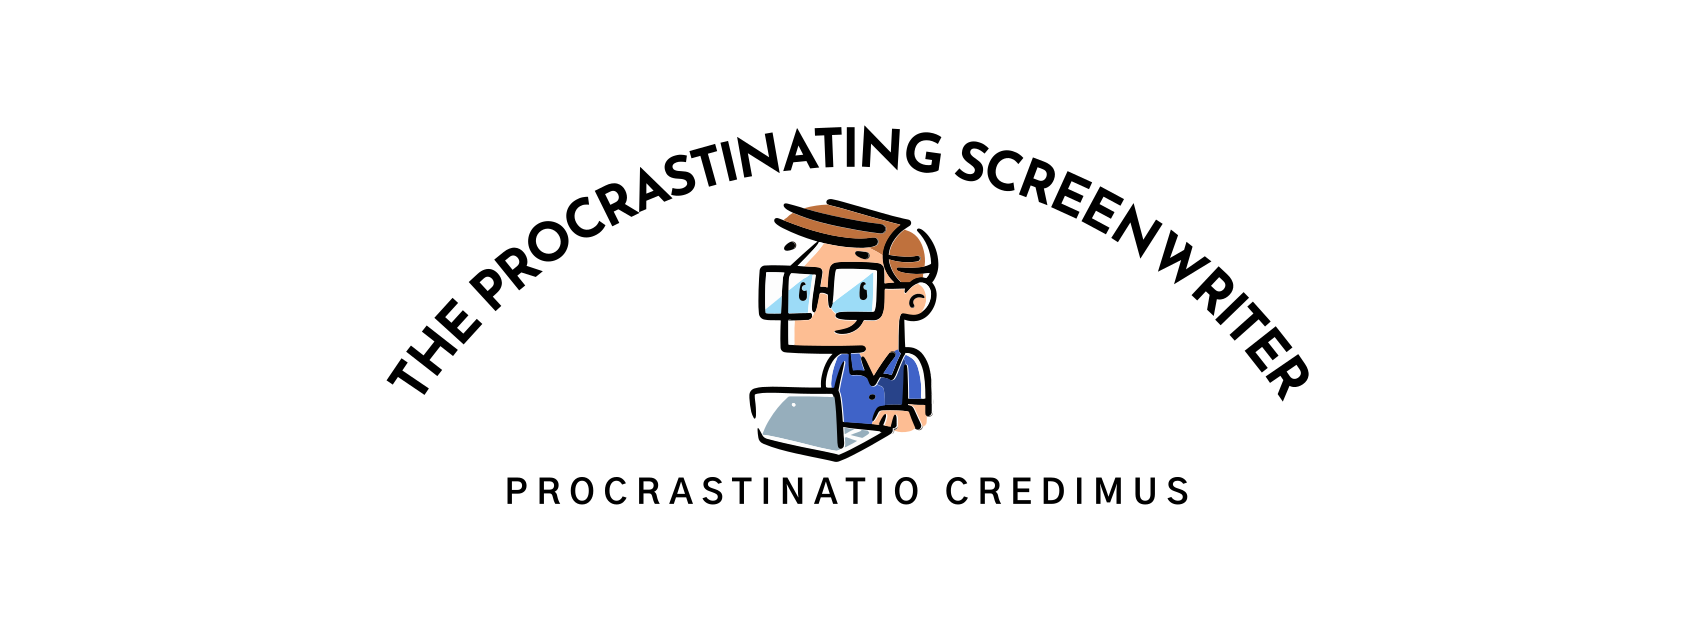 The Procrastinating Screenwriter